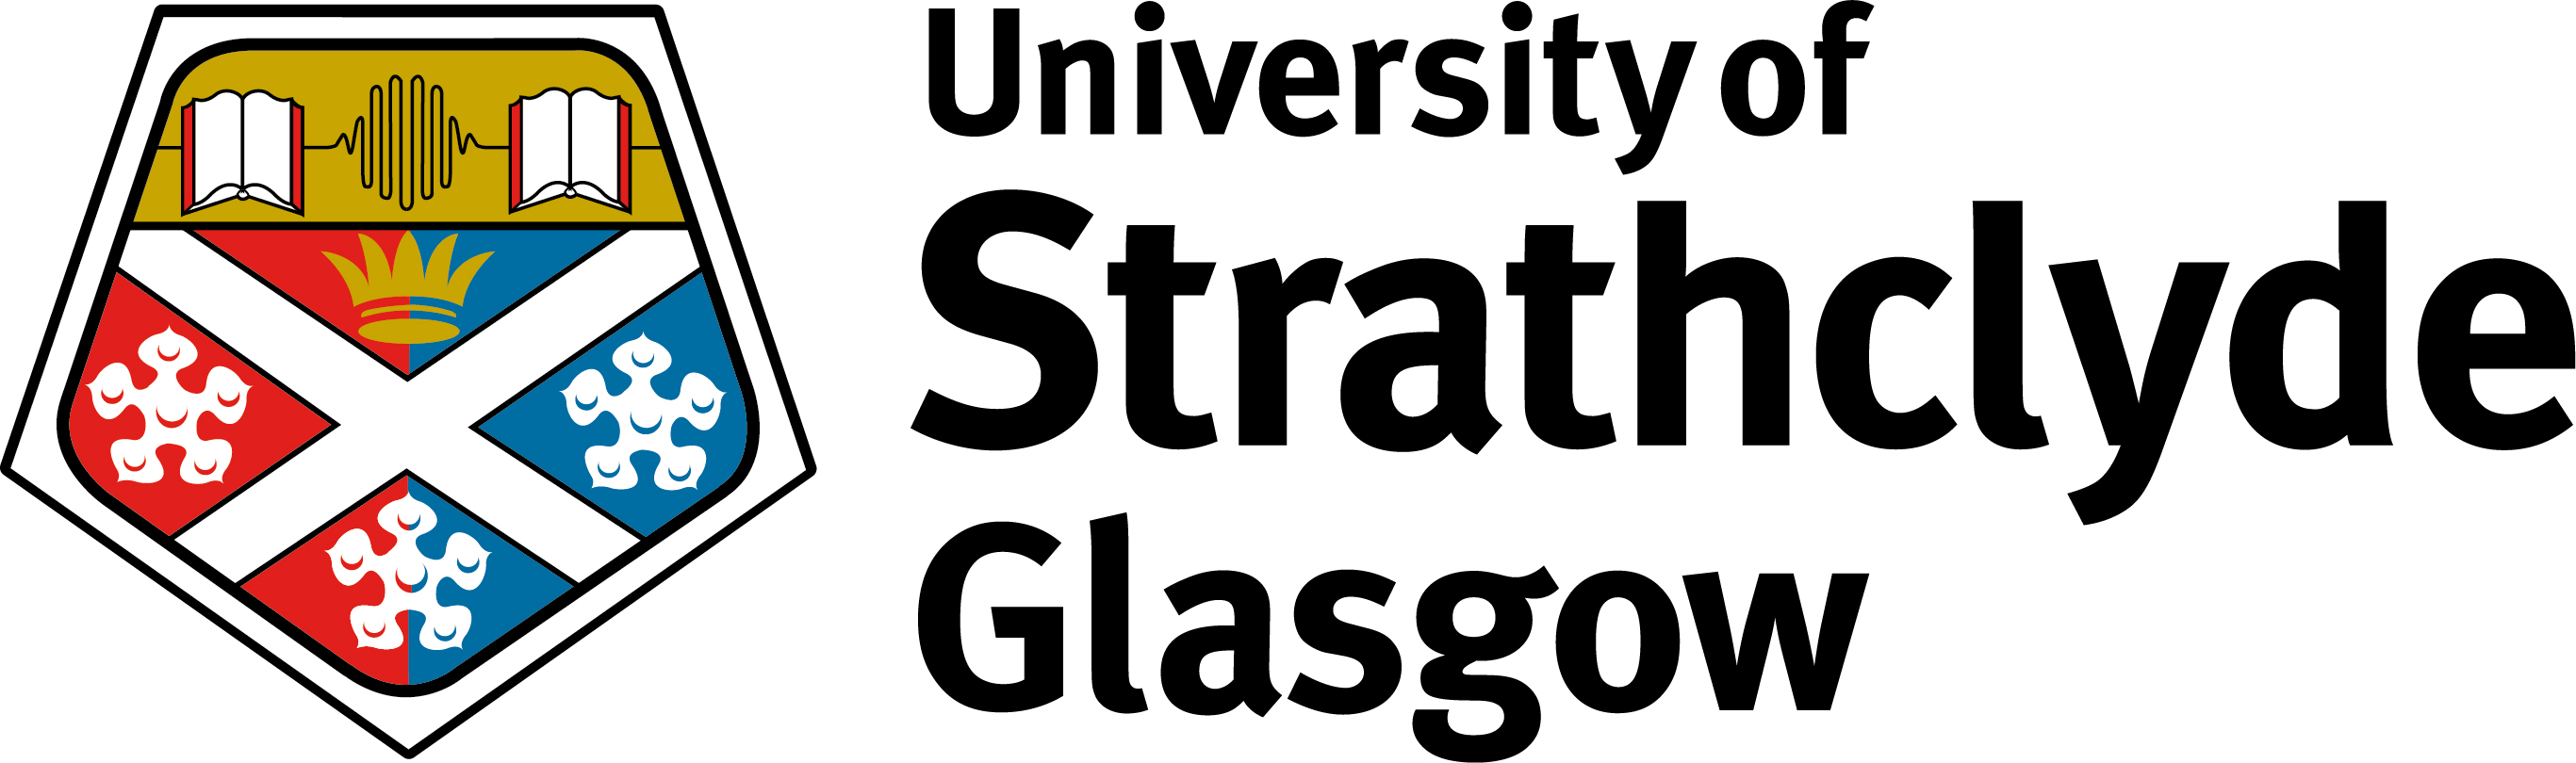 Strathclyde university of University of